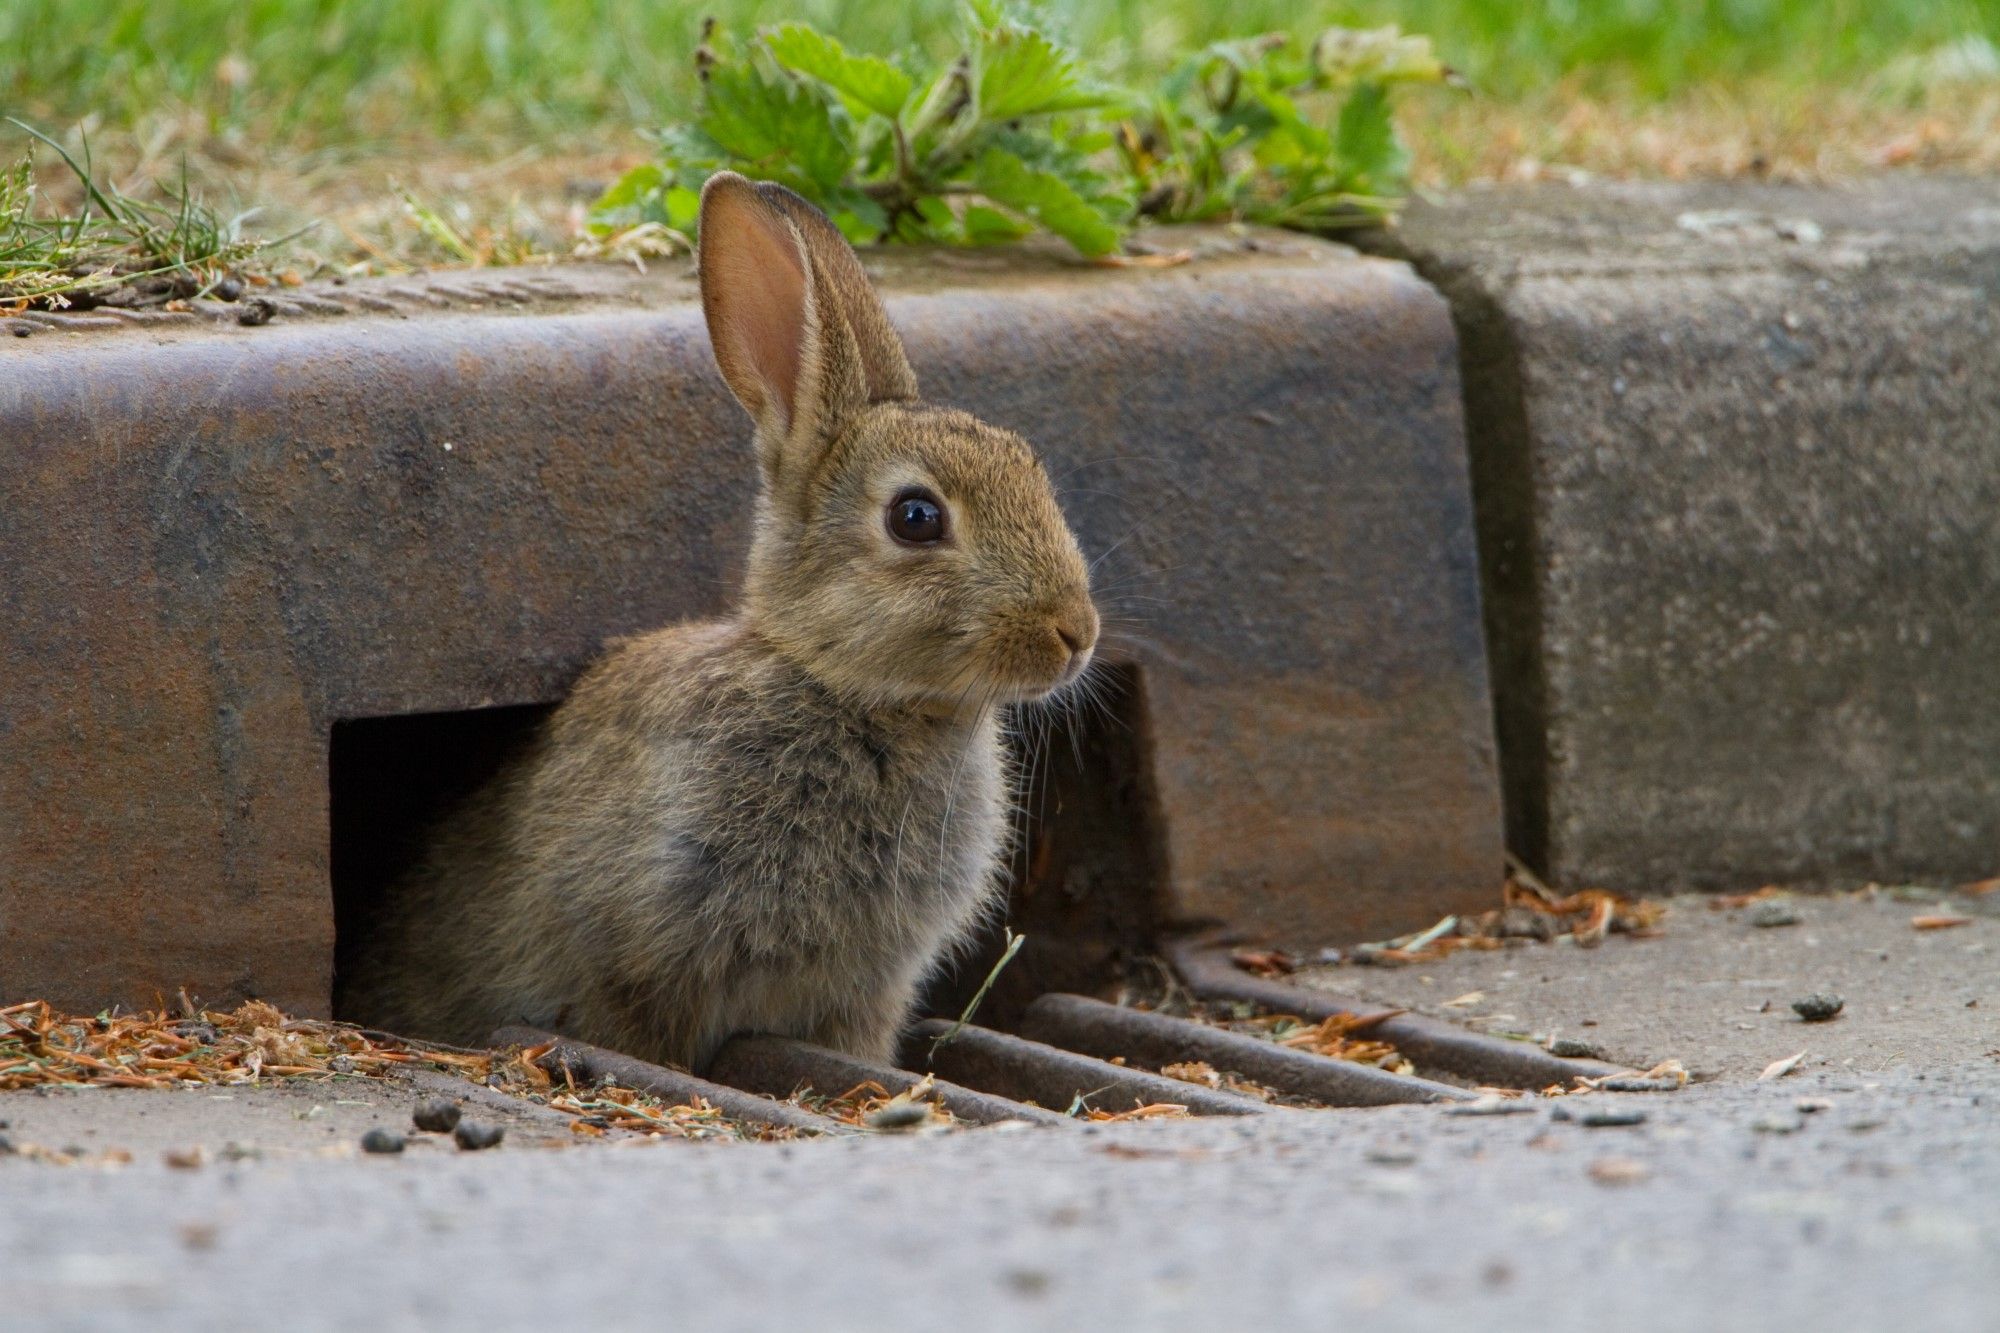 A wild rabbit in a road drain. Photo by Paul Bunyard